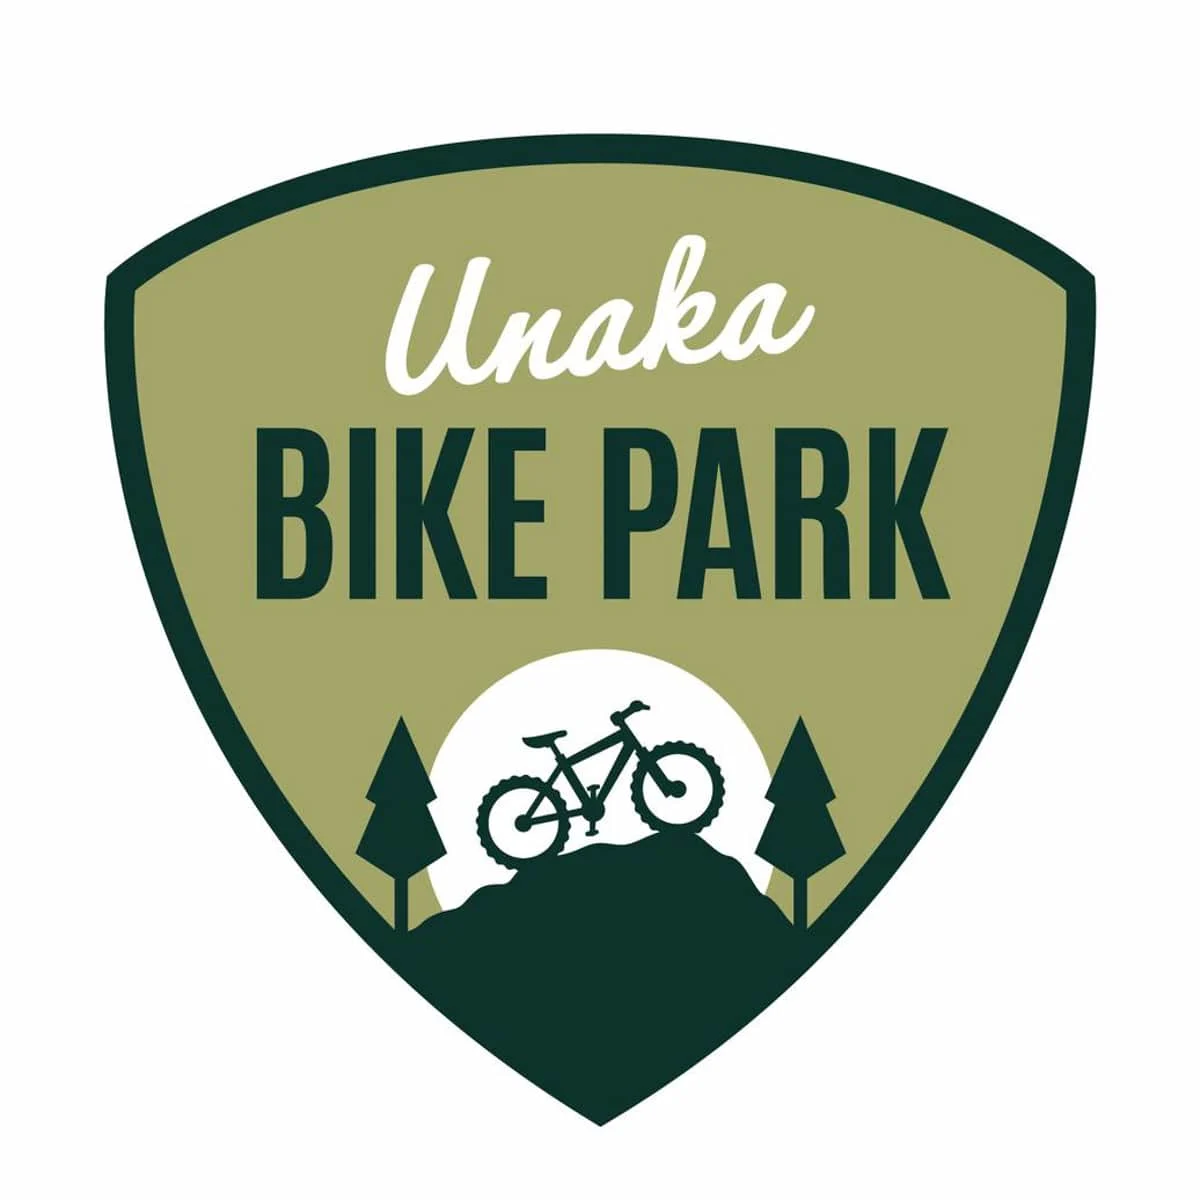 Unaka Bike park sign